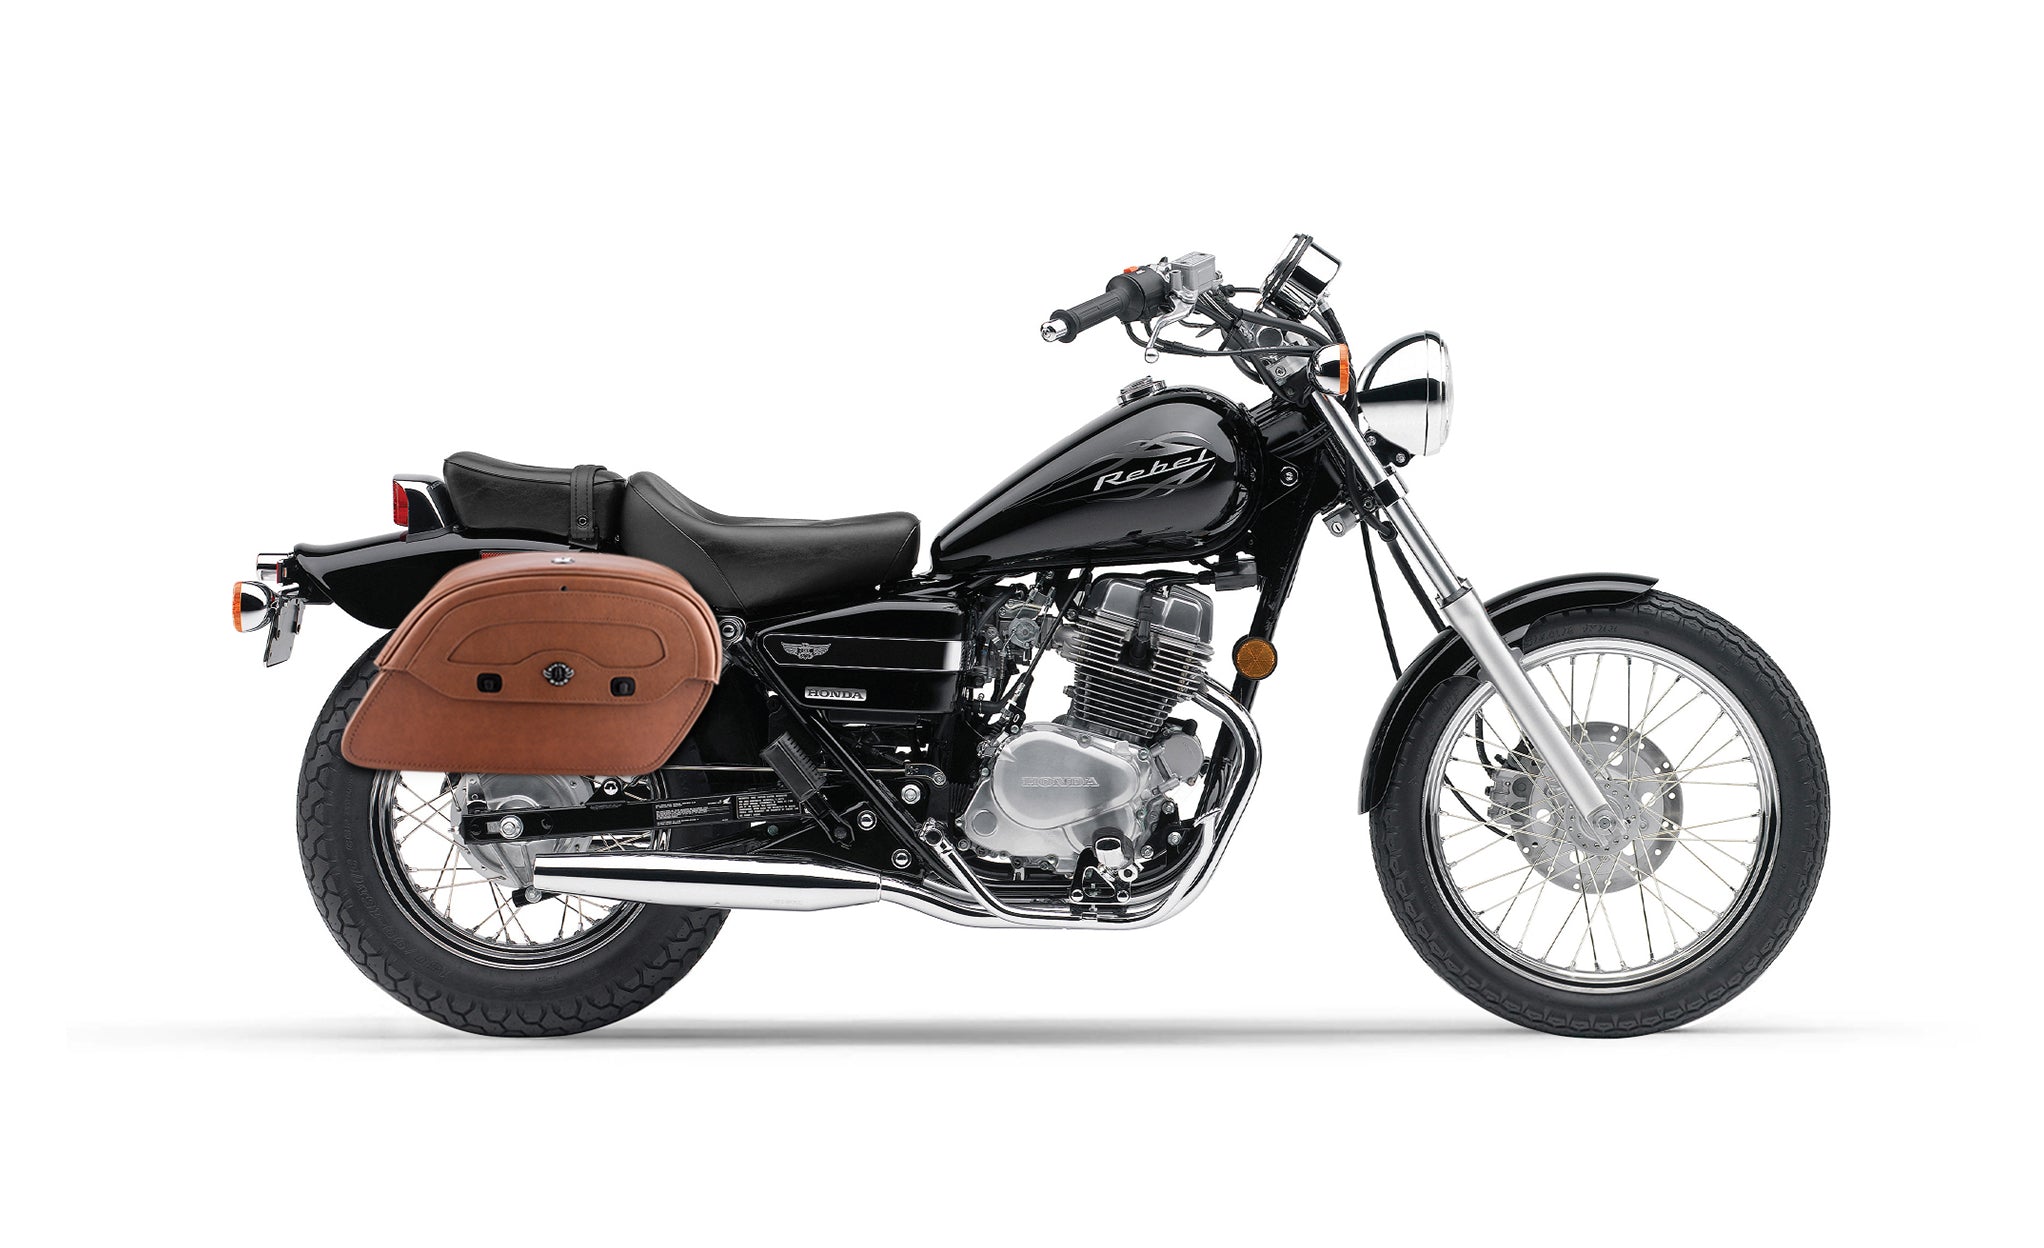 Viking Warrior Brown Large Honda Rebel 250 Leather Motorcycle Saddlebags on Bike Photo @expand